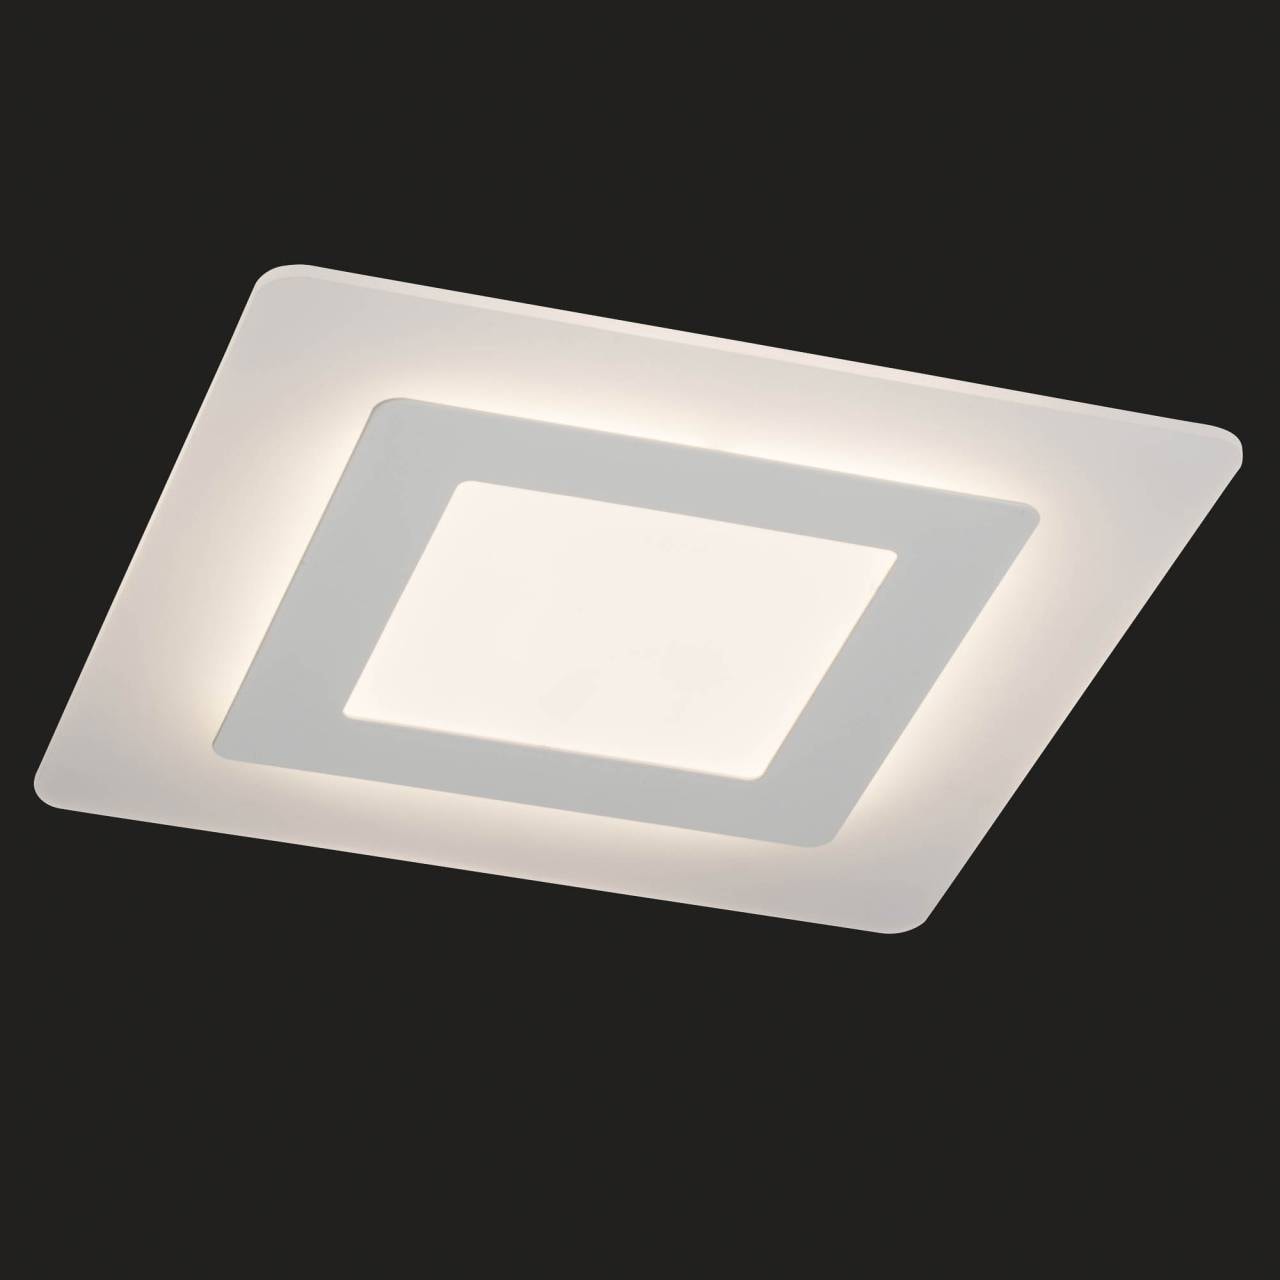 AEG LED Deckenleuchte »Xenos«, 1 flammig-flammig, 35 x 35 cm, 3300 lm,  warmweiß, Aluminium/Acryl, weiß | BAUR | Deckenlampen